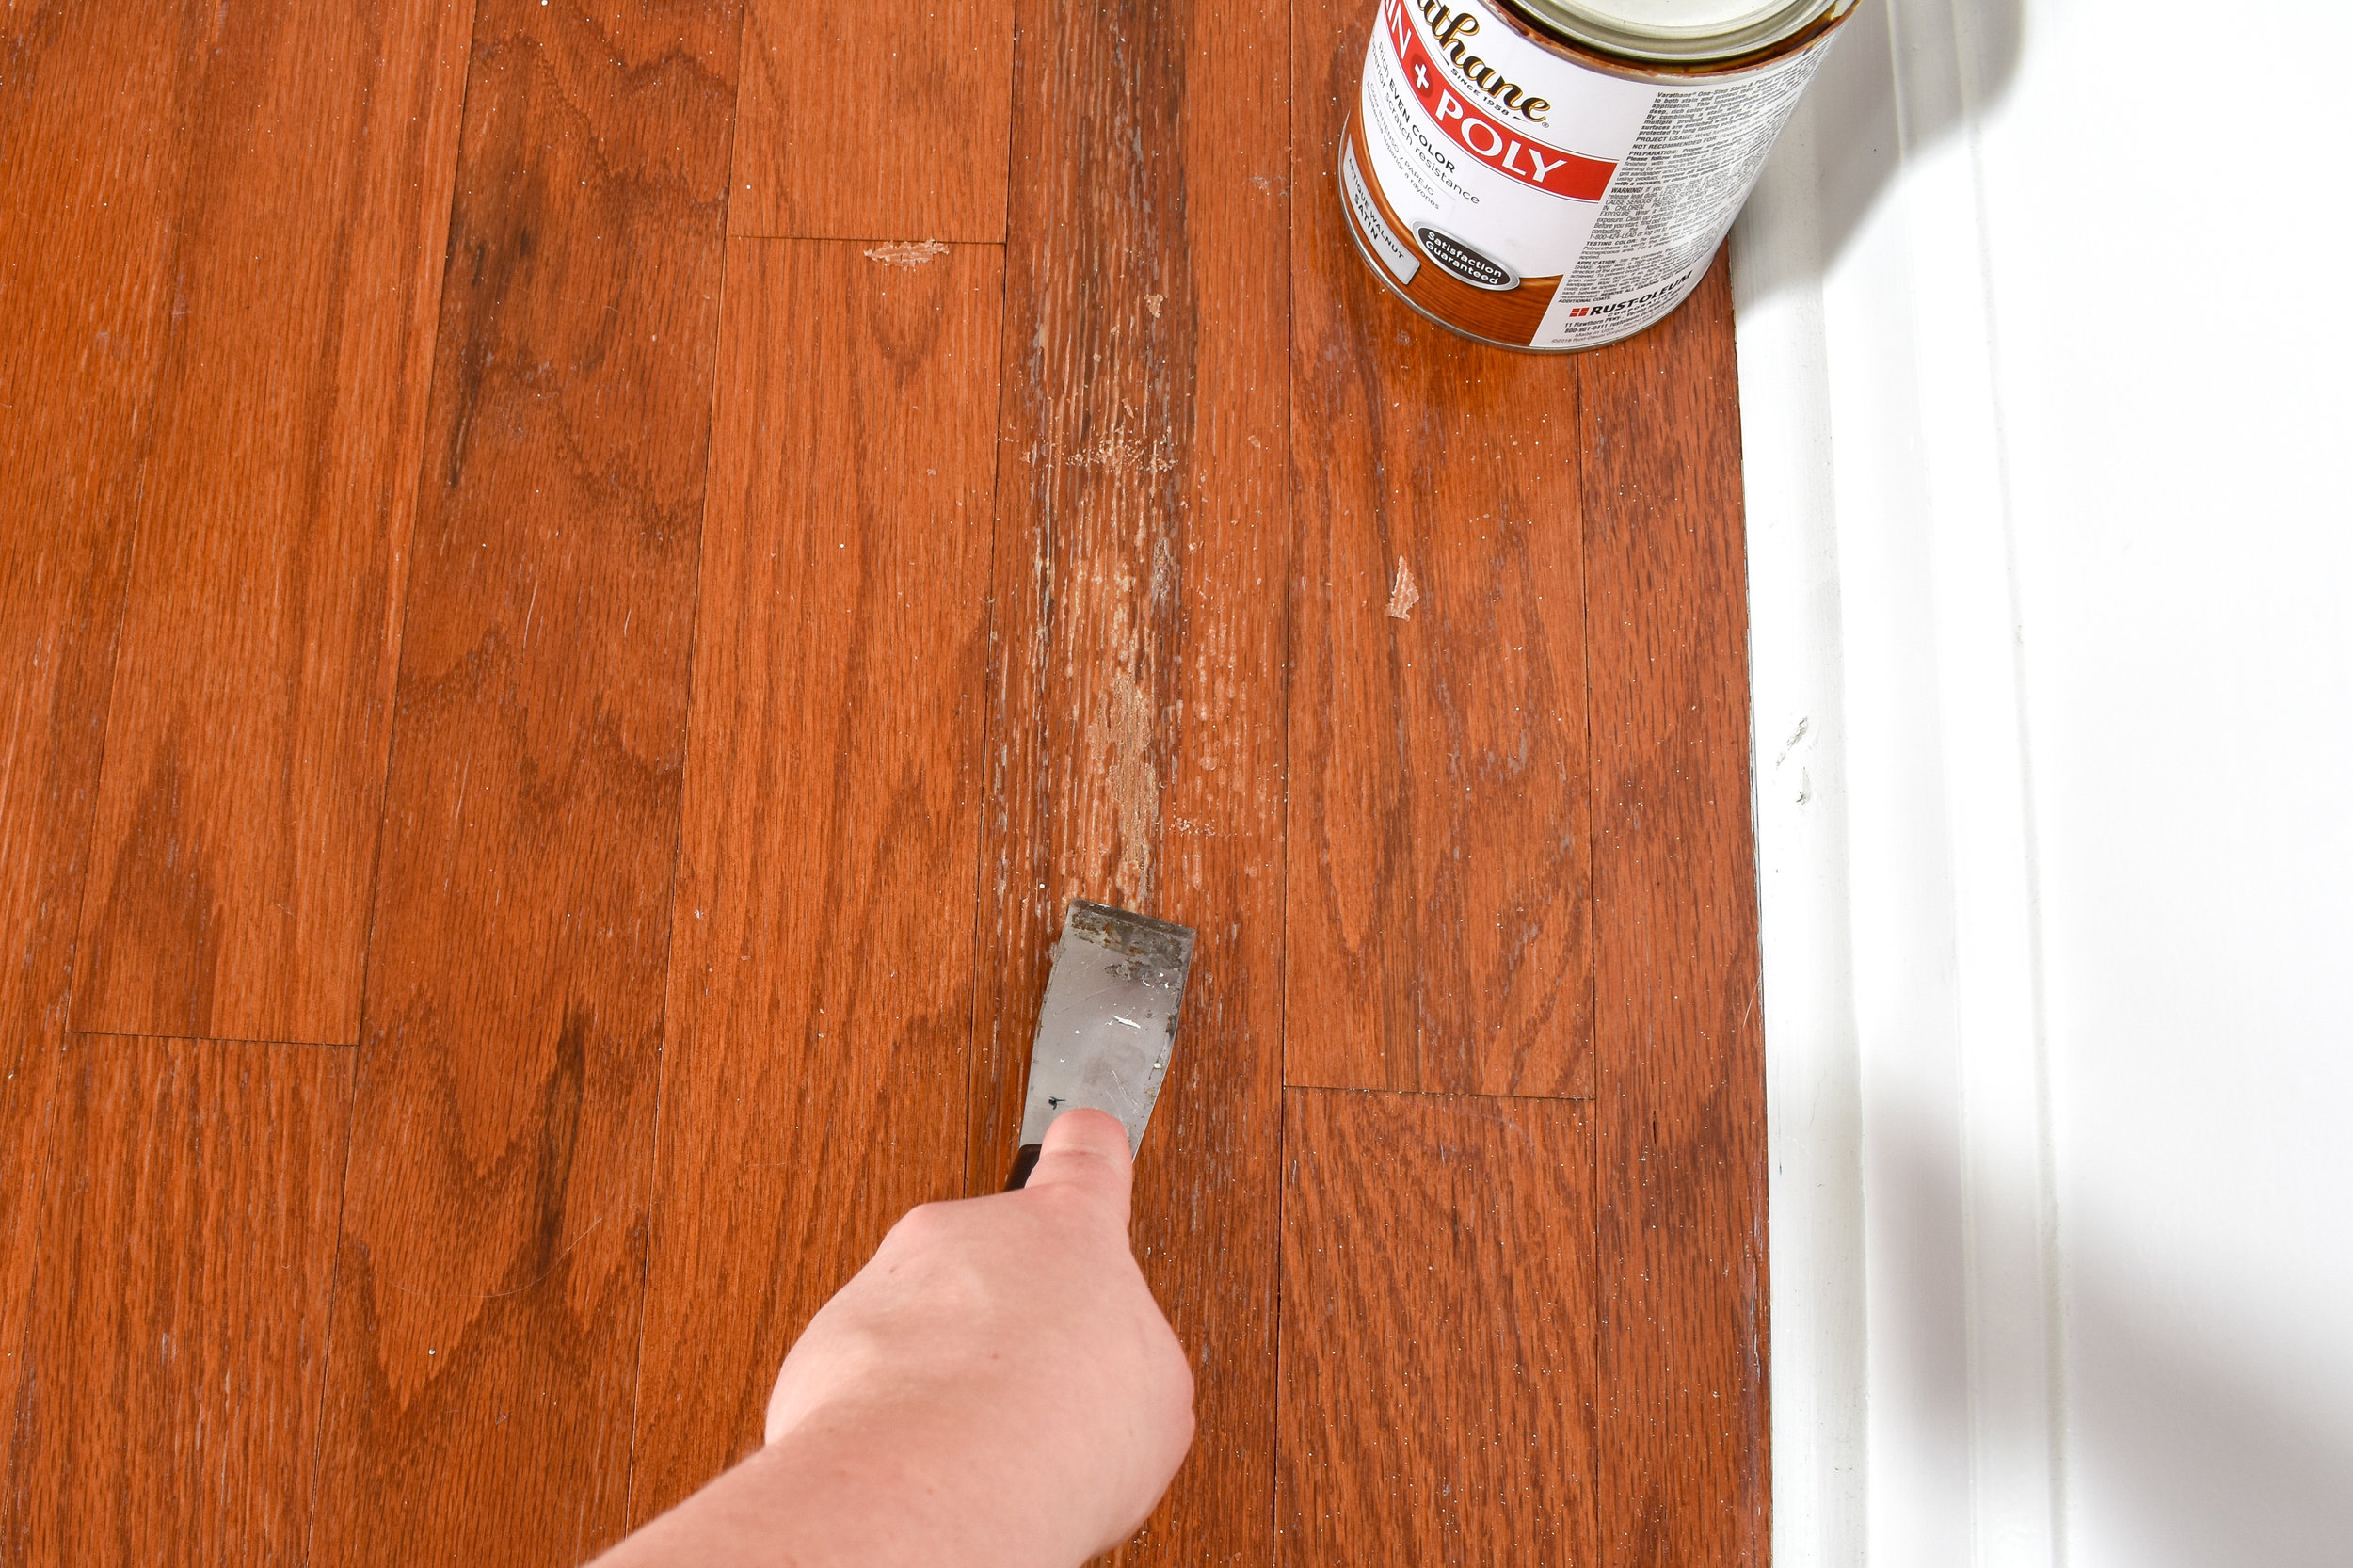 How To Make Old Hardwood Floors Shine, How To Prevent Paw Prints On Hardwood Floors